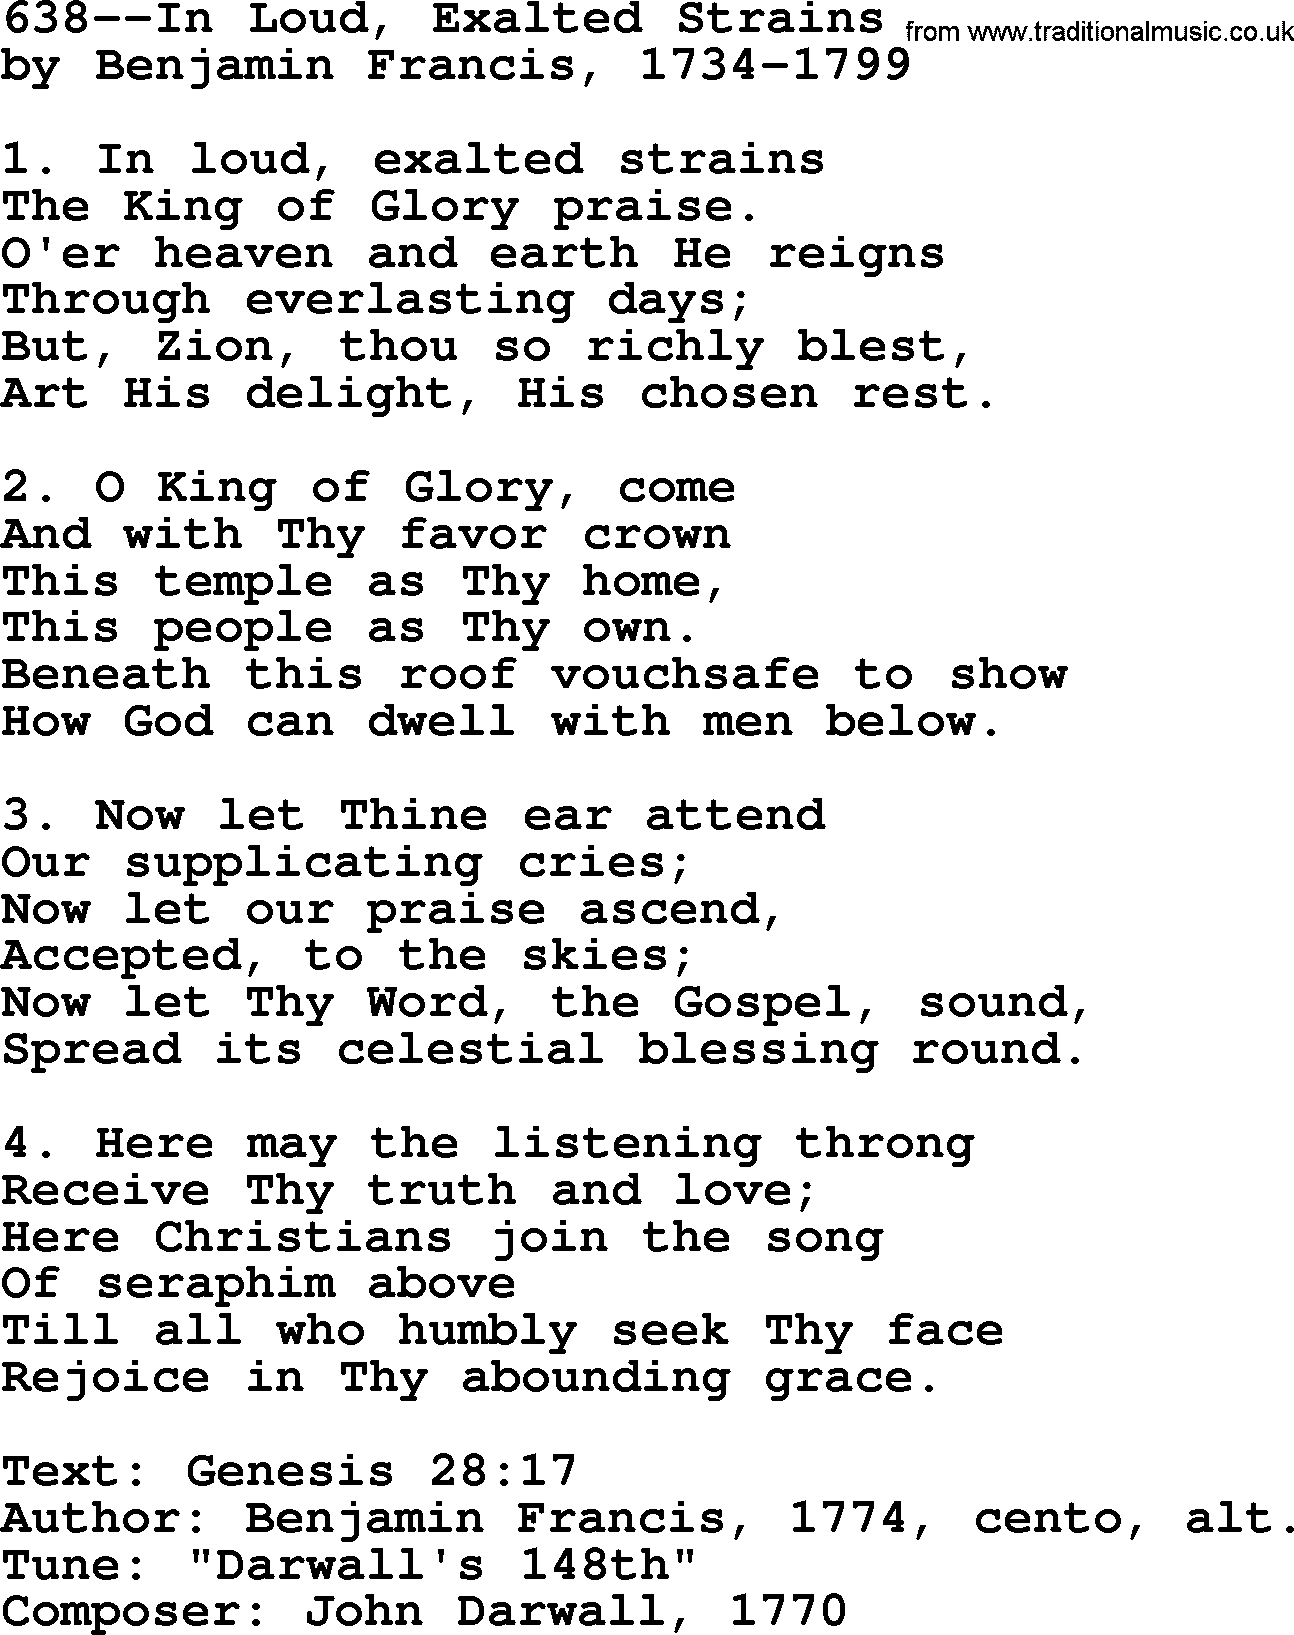 Lutheran Hymn: 638--In Loud, Exalted Strains.txt lyrics with PDF